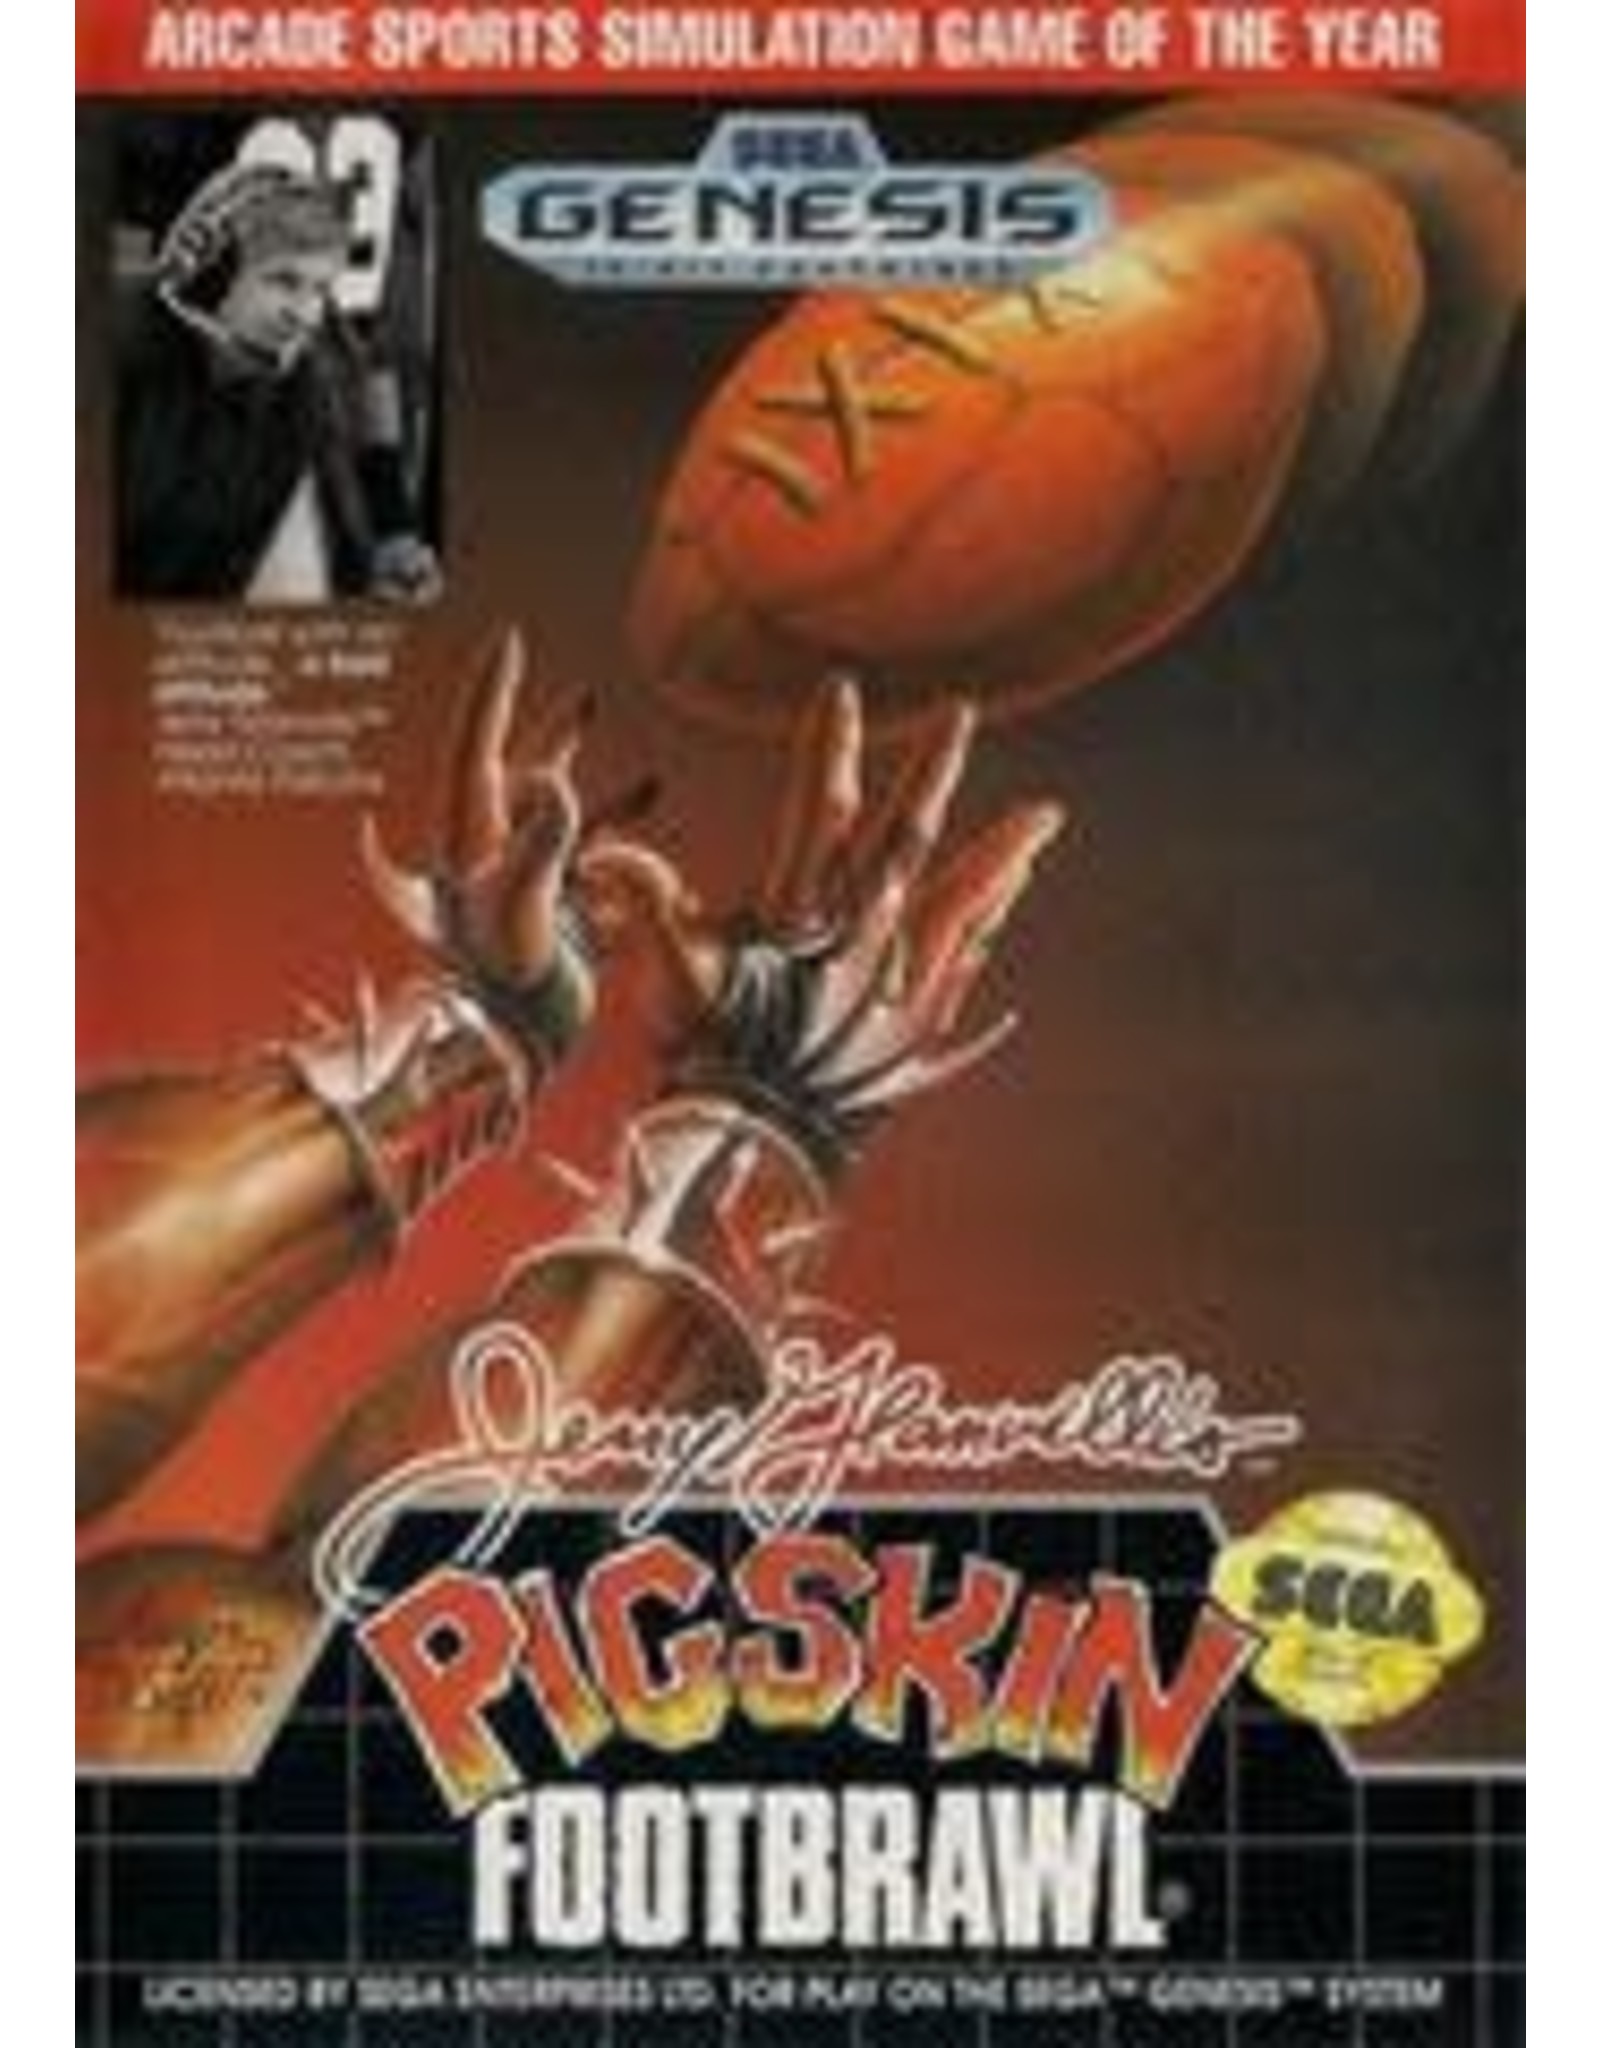 Sega Genesis Jerry Glanville's Pigskin Footbrawl (Damaged Label)